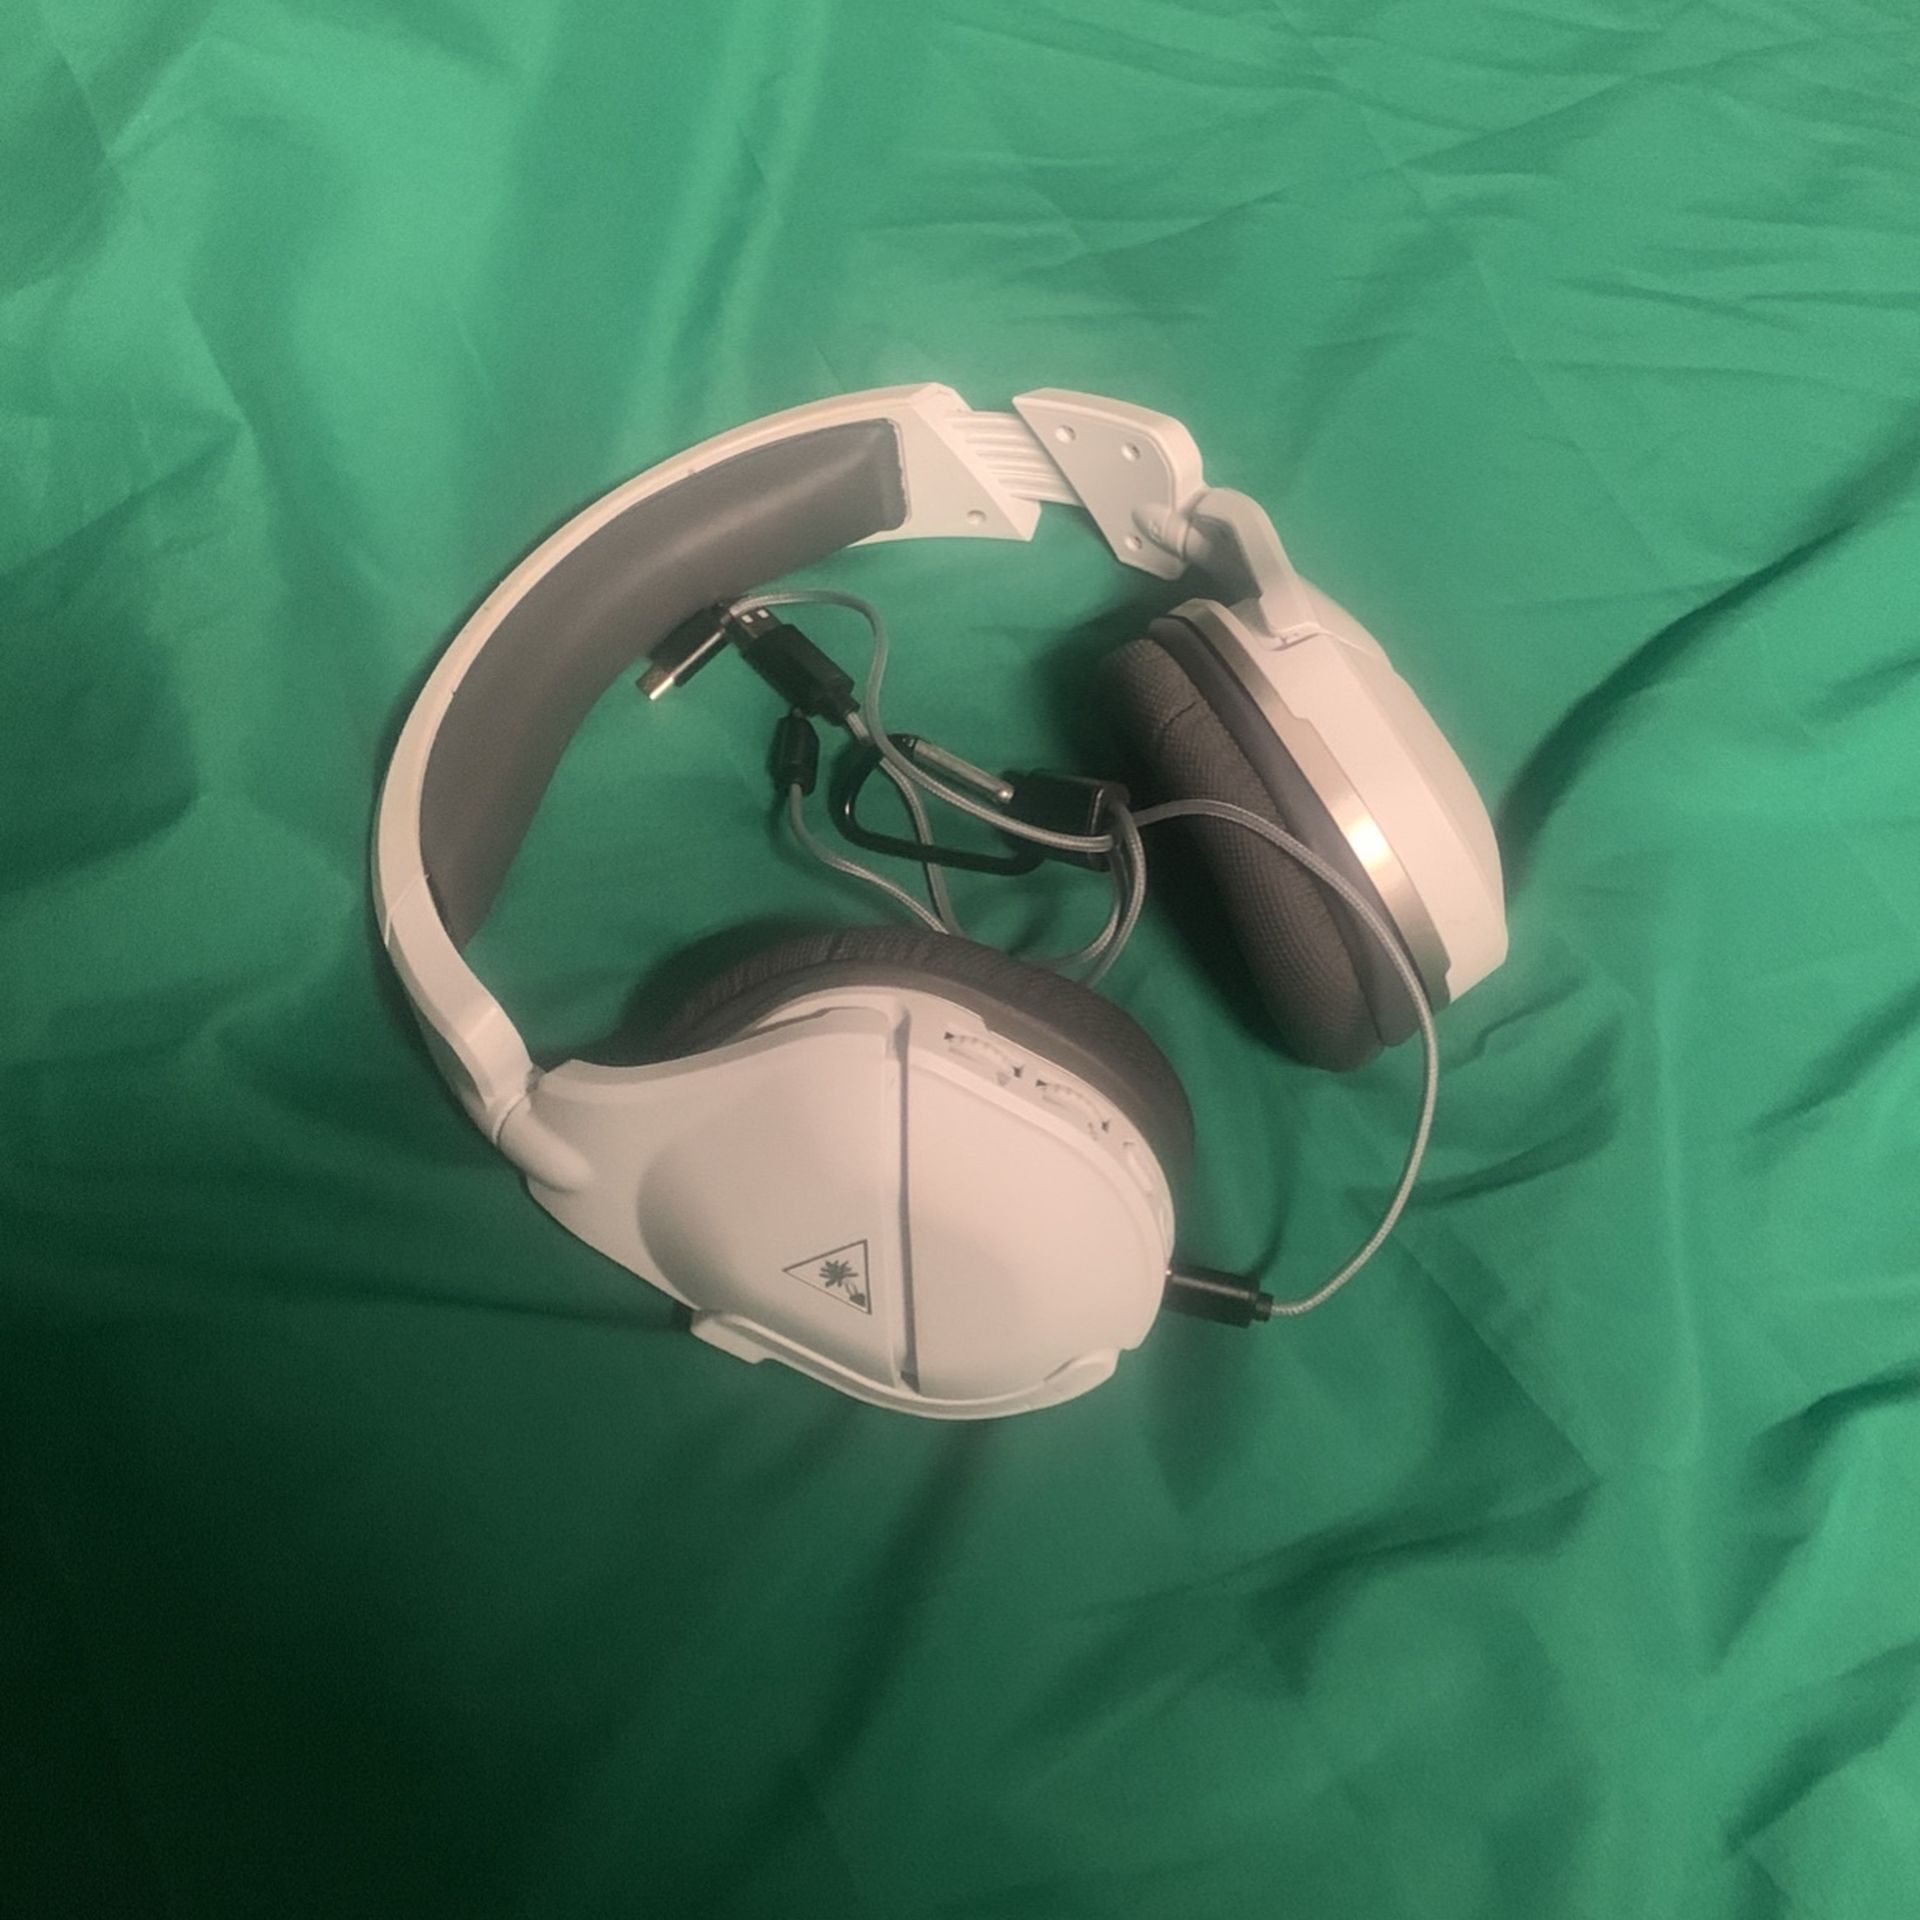 Bluetooth Turtle Beach Headphones w/ Charger